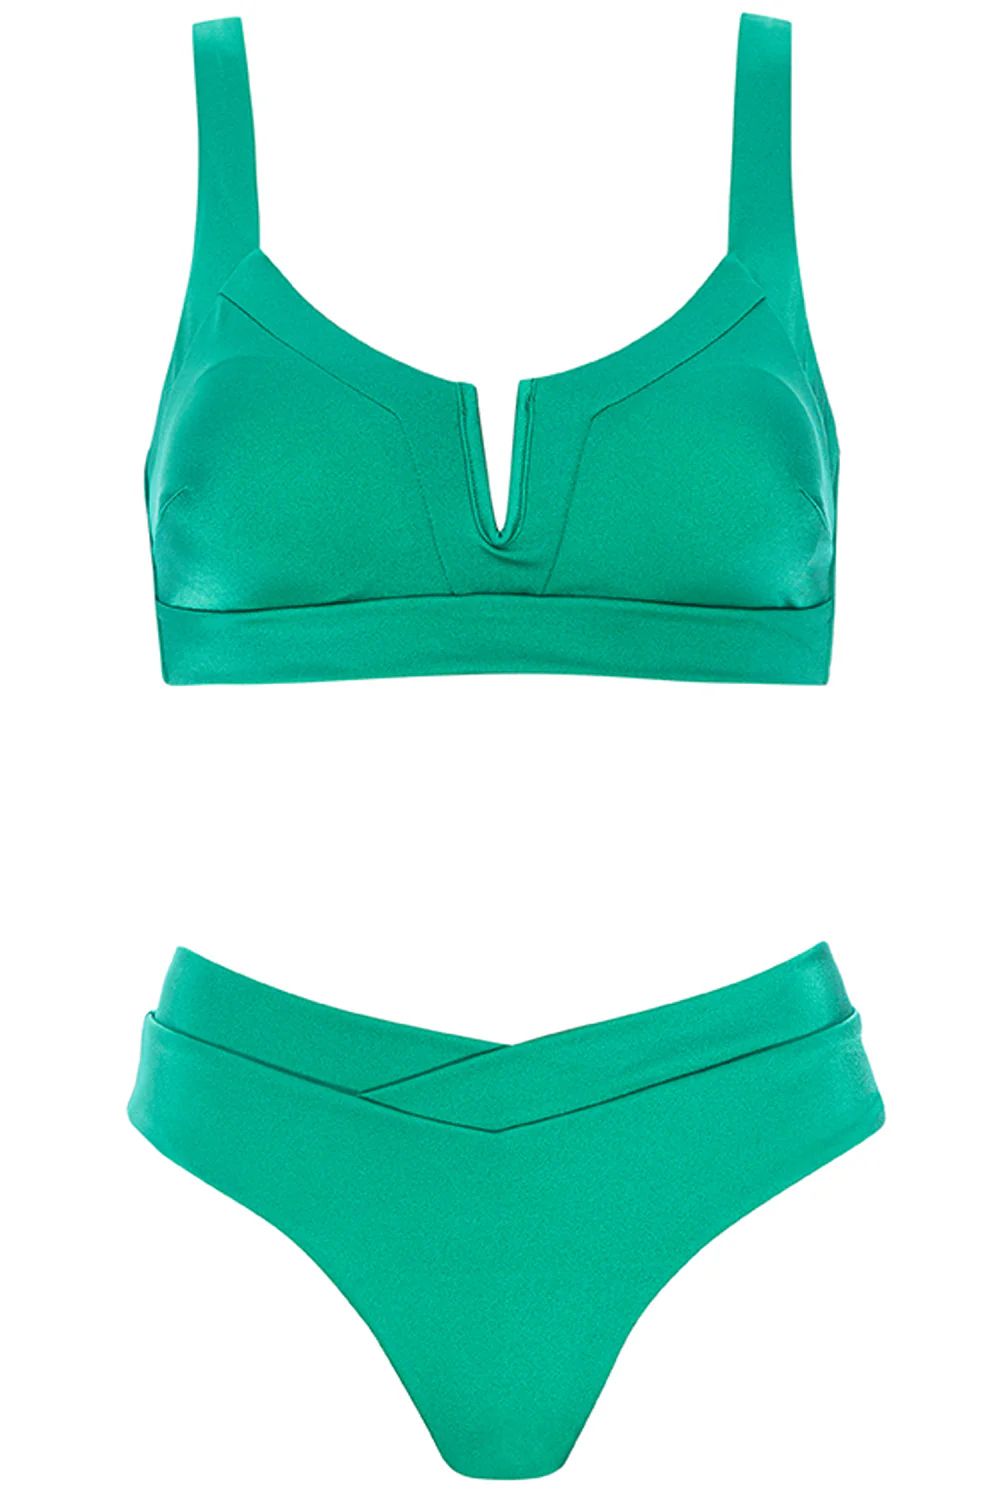 Vista Bikini Green Set | VETCHY